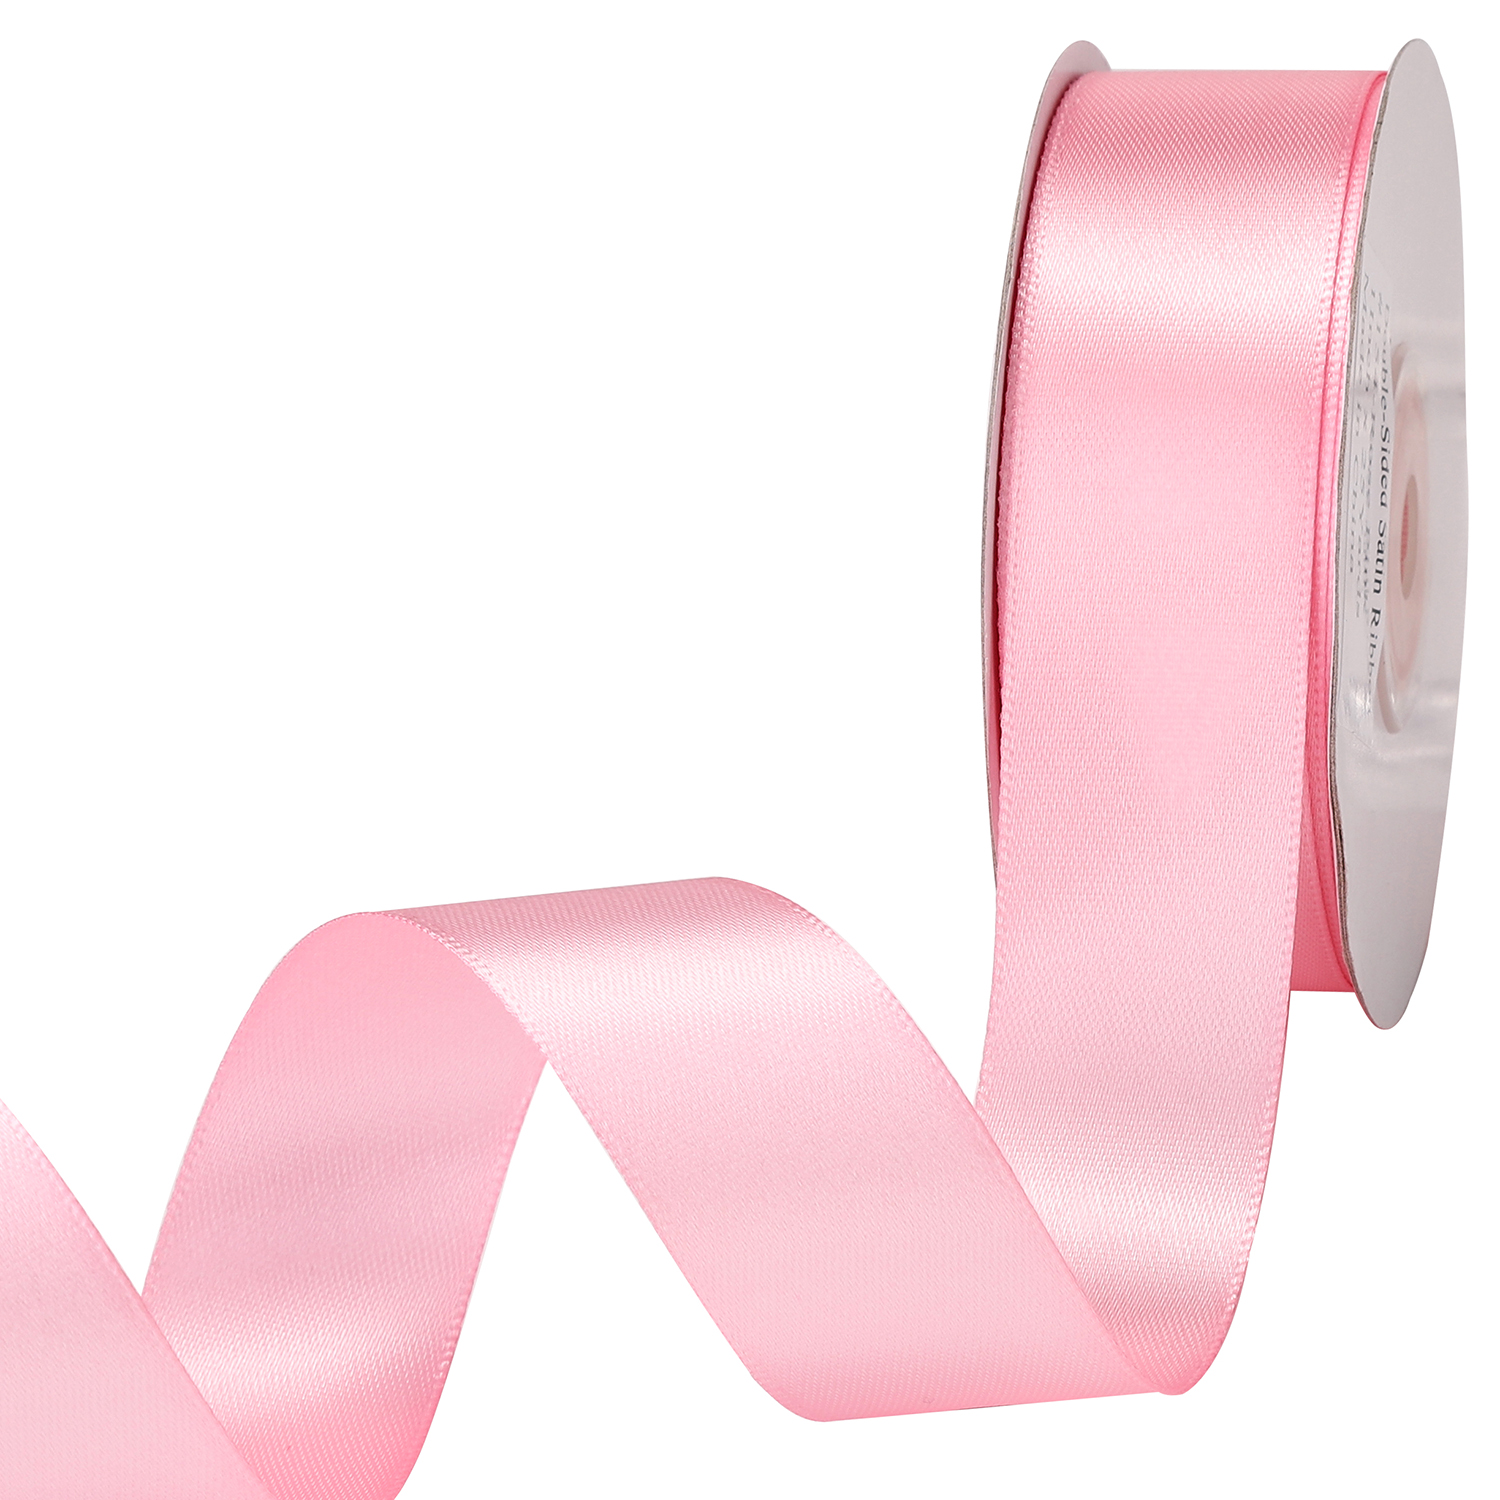 Ribbon 1 inch Flamingo Pink Ribbons for Crafts Gift Ribbon Satin Solid  Ribbon Roll 1 in x 25 Yards